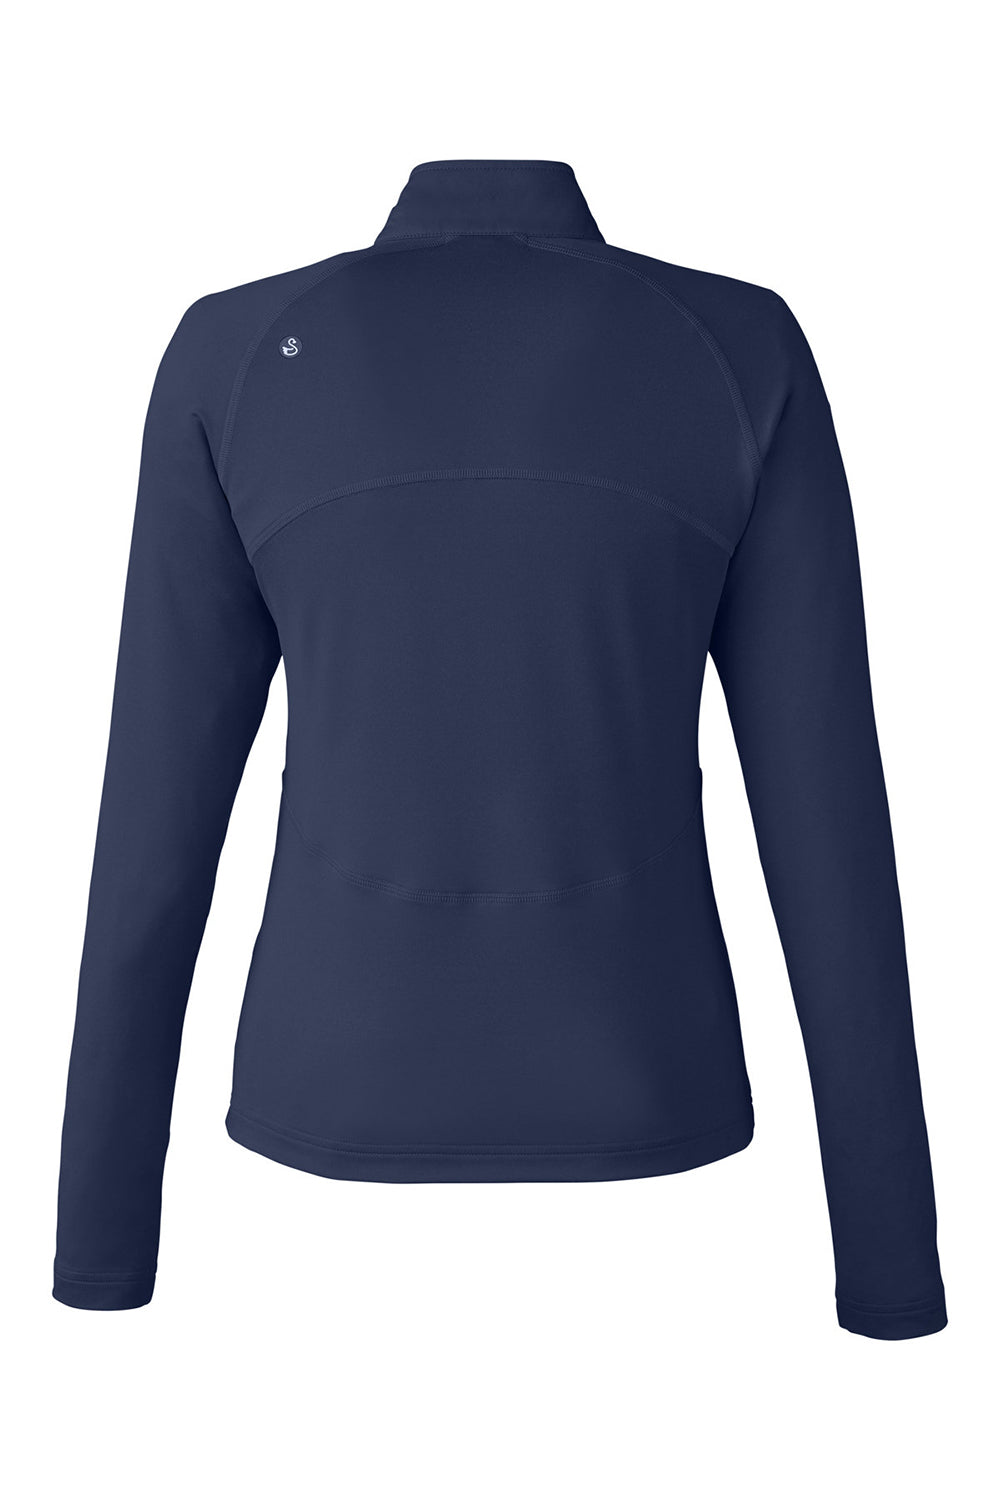 Swannies Golf SWF400L Womens Cora Full Zip Jacket Navy Blue Flat Back